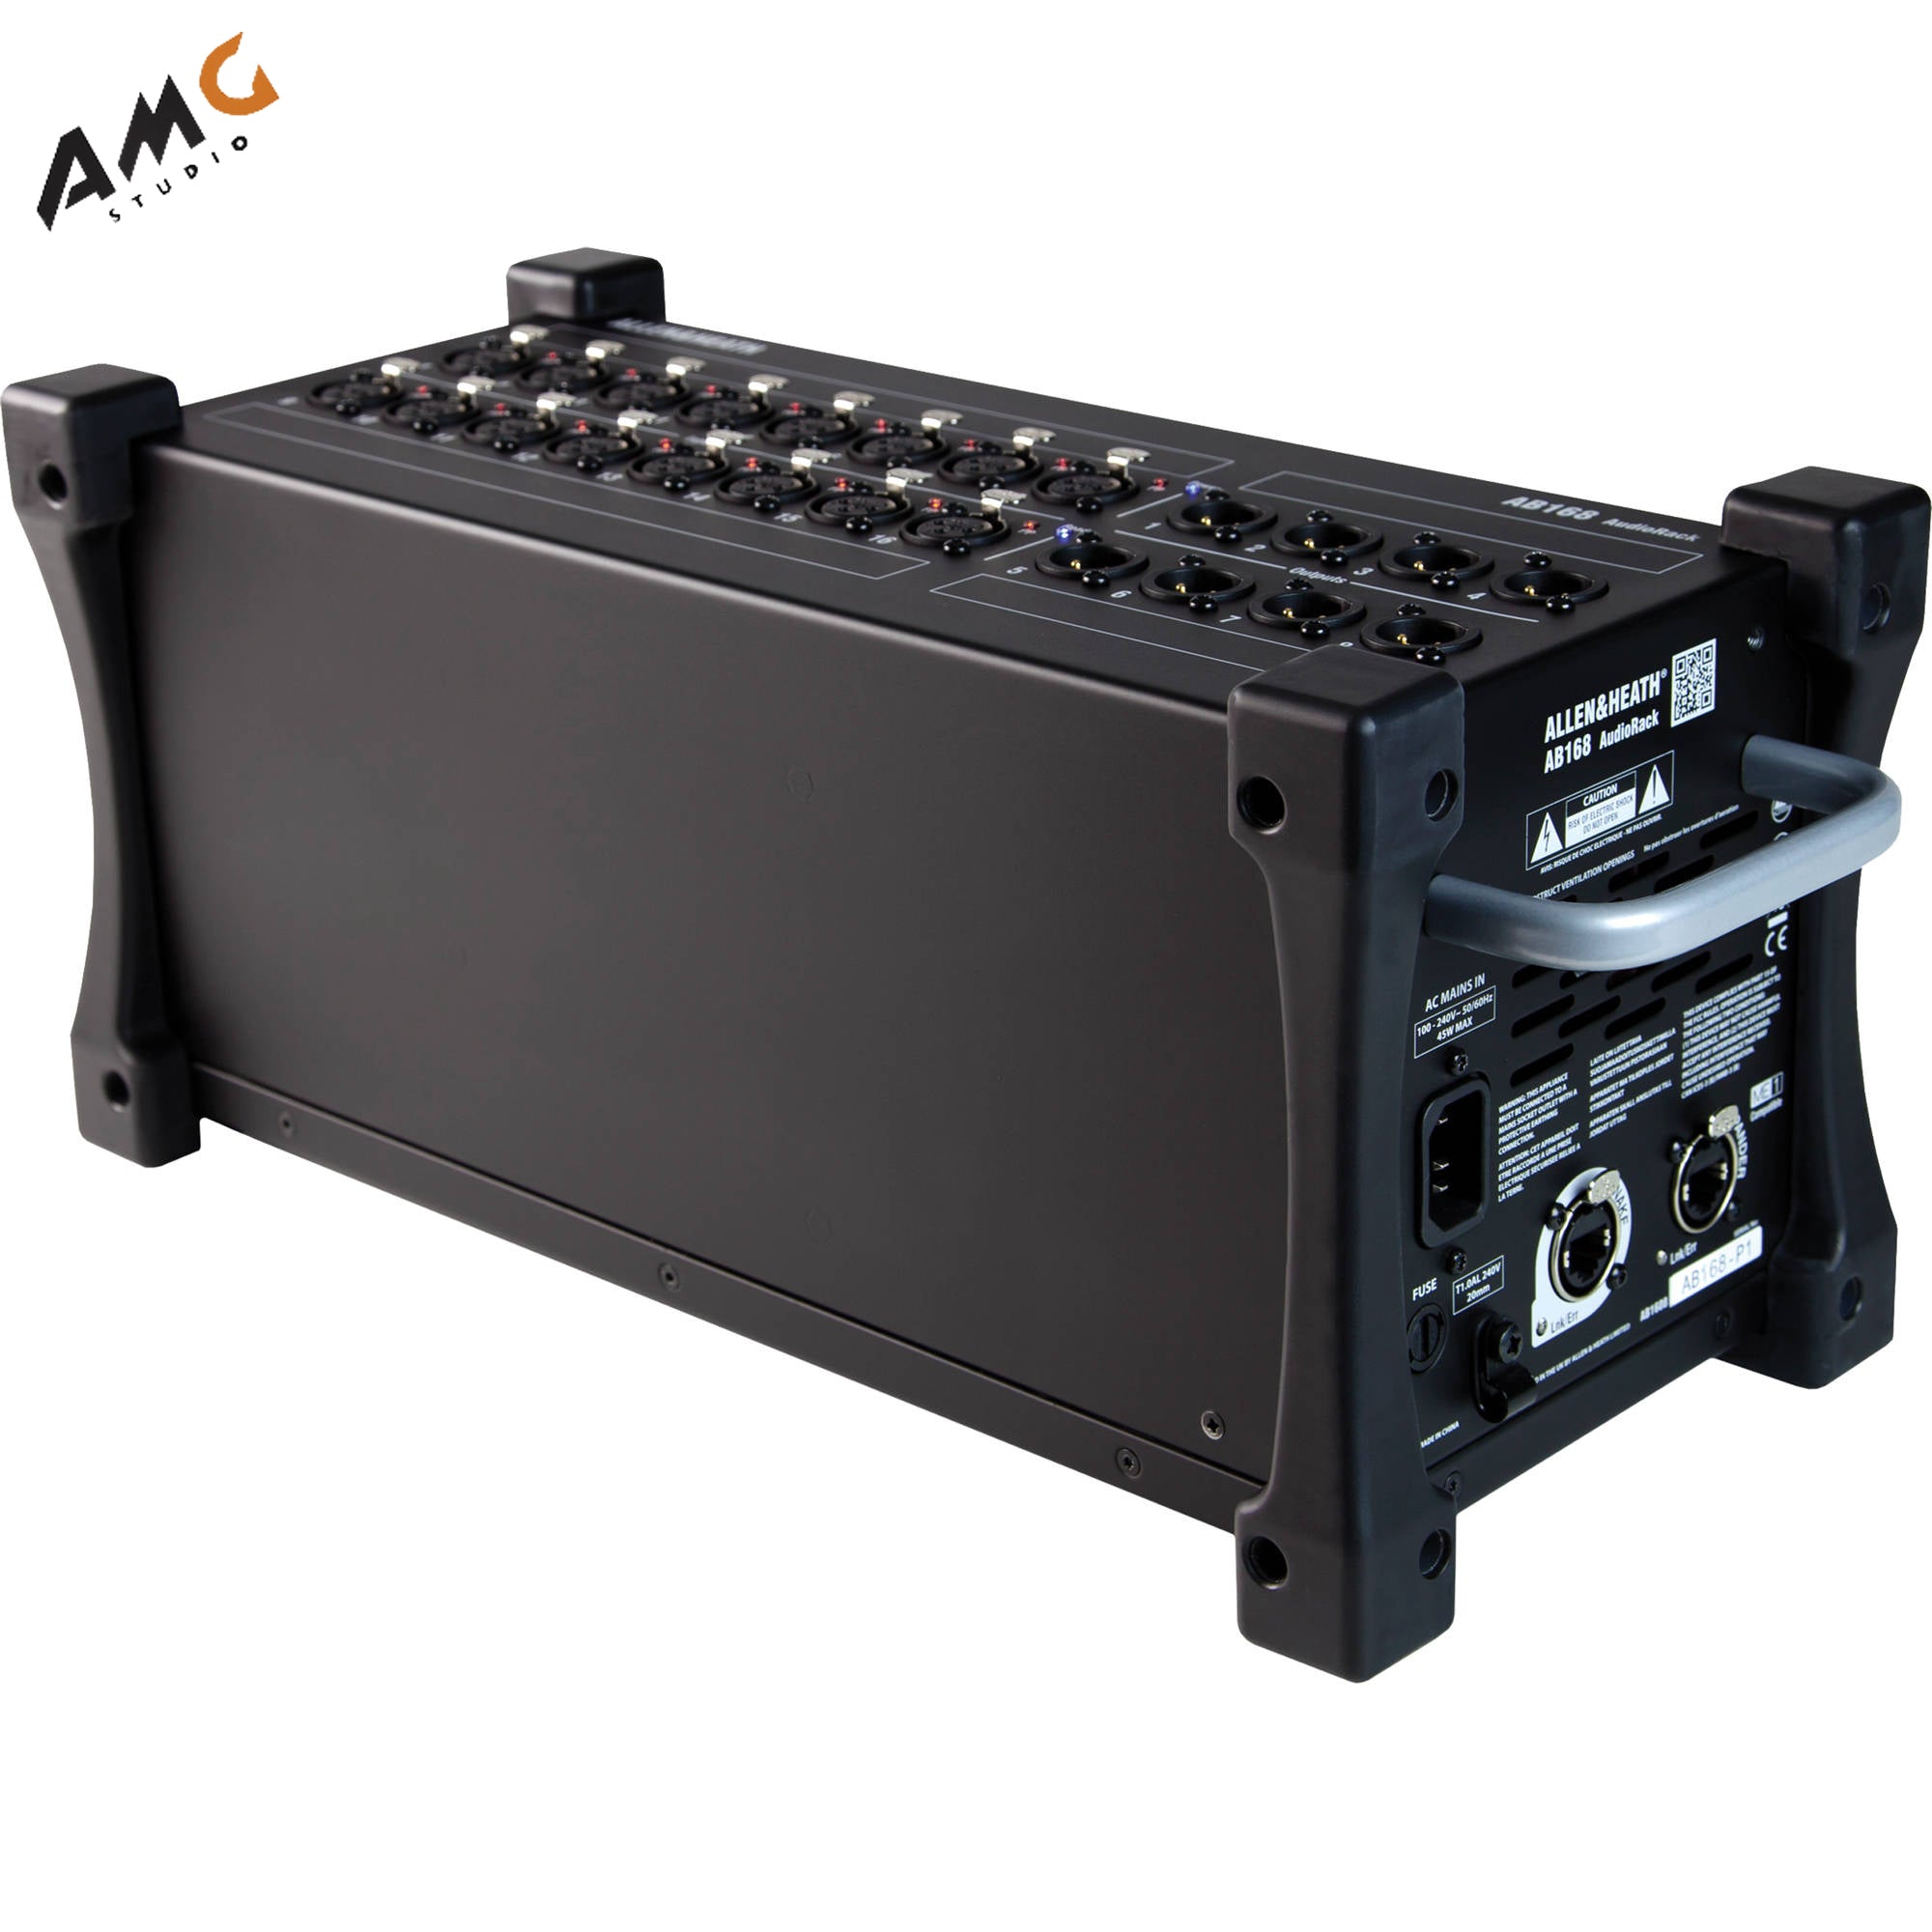 Allen & Heath AB168 Portable AudioRack 16 x 8 Audio Interface Stage Box AH-AB-16 - Studio AMG